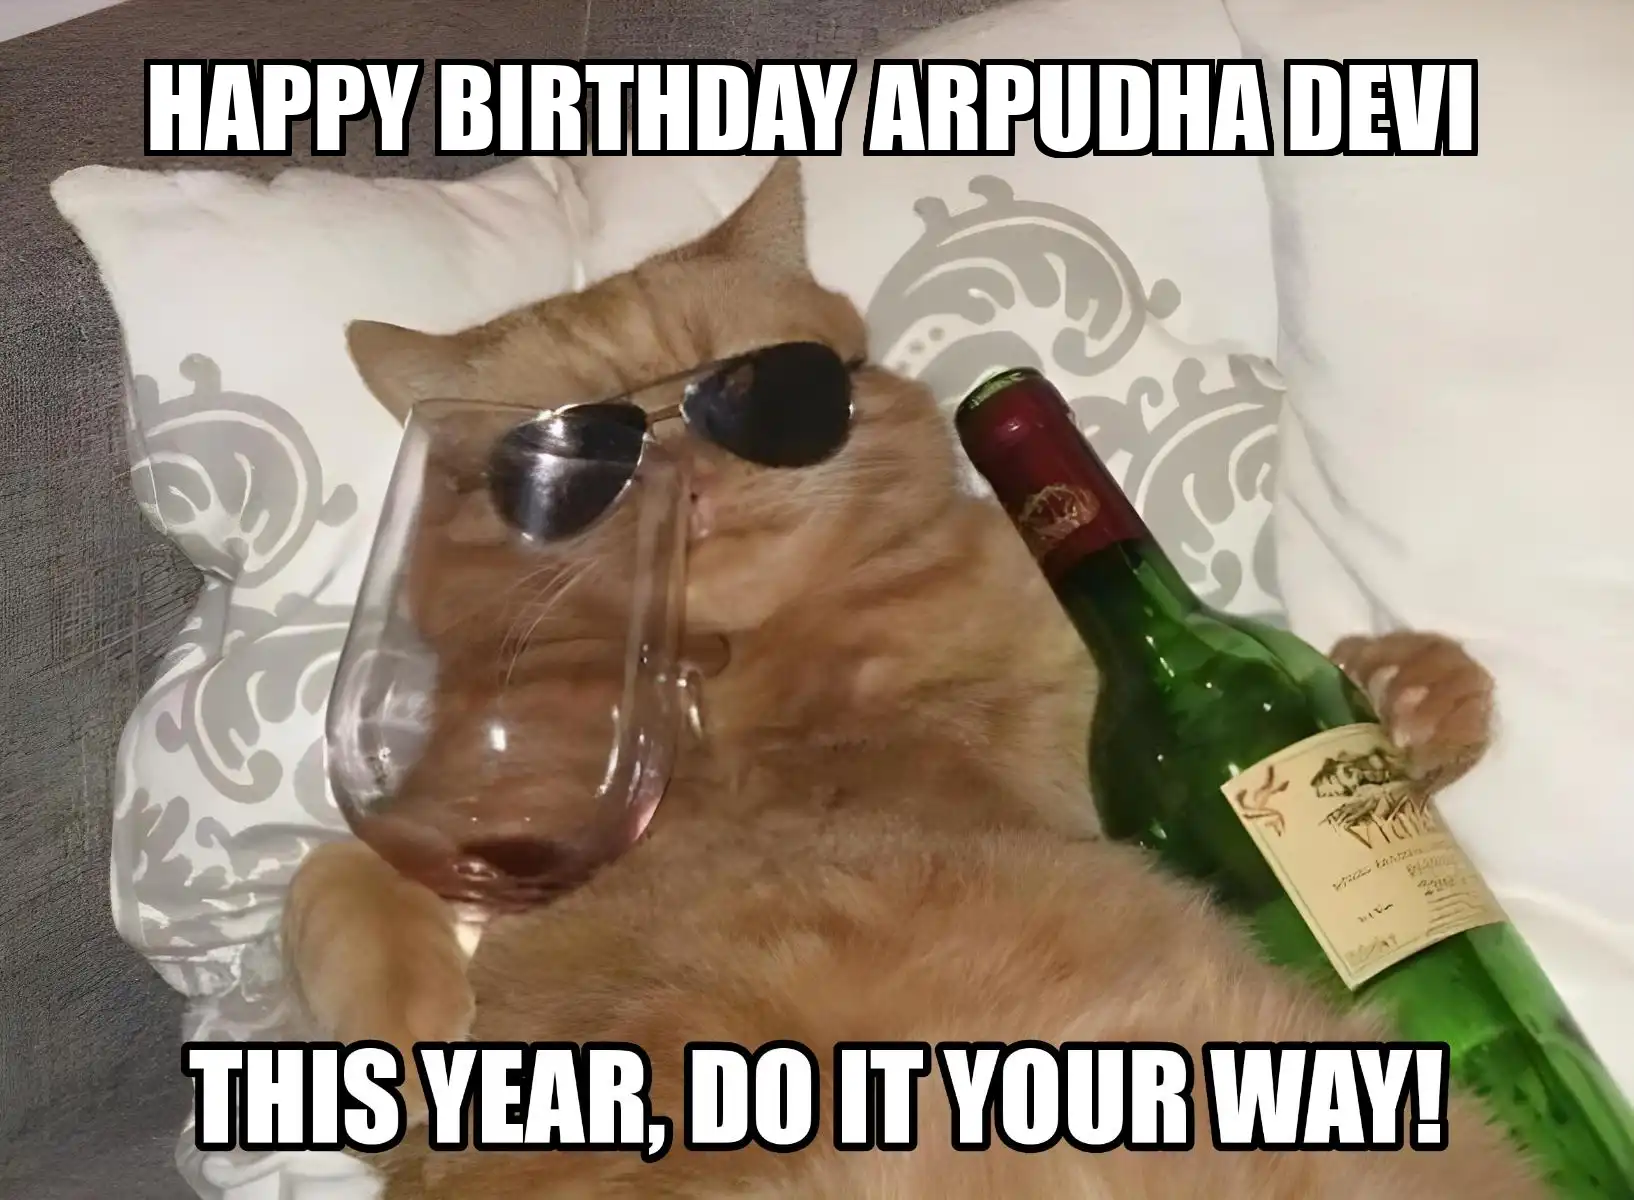 Happy Birthday Arpudha devi This Year Do It Your Way Meme